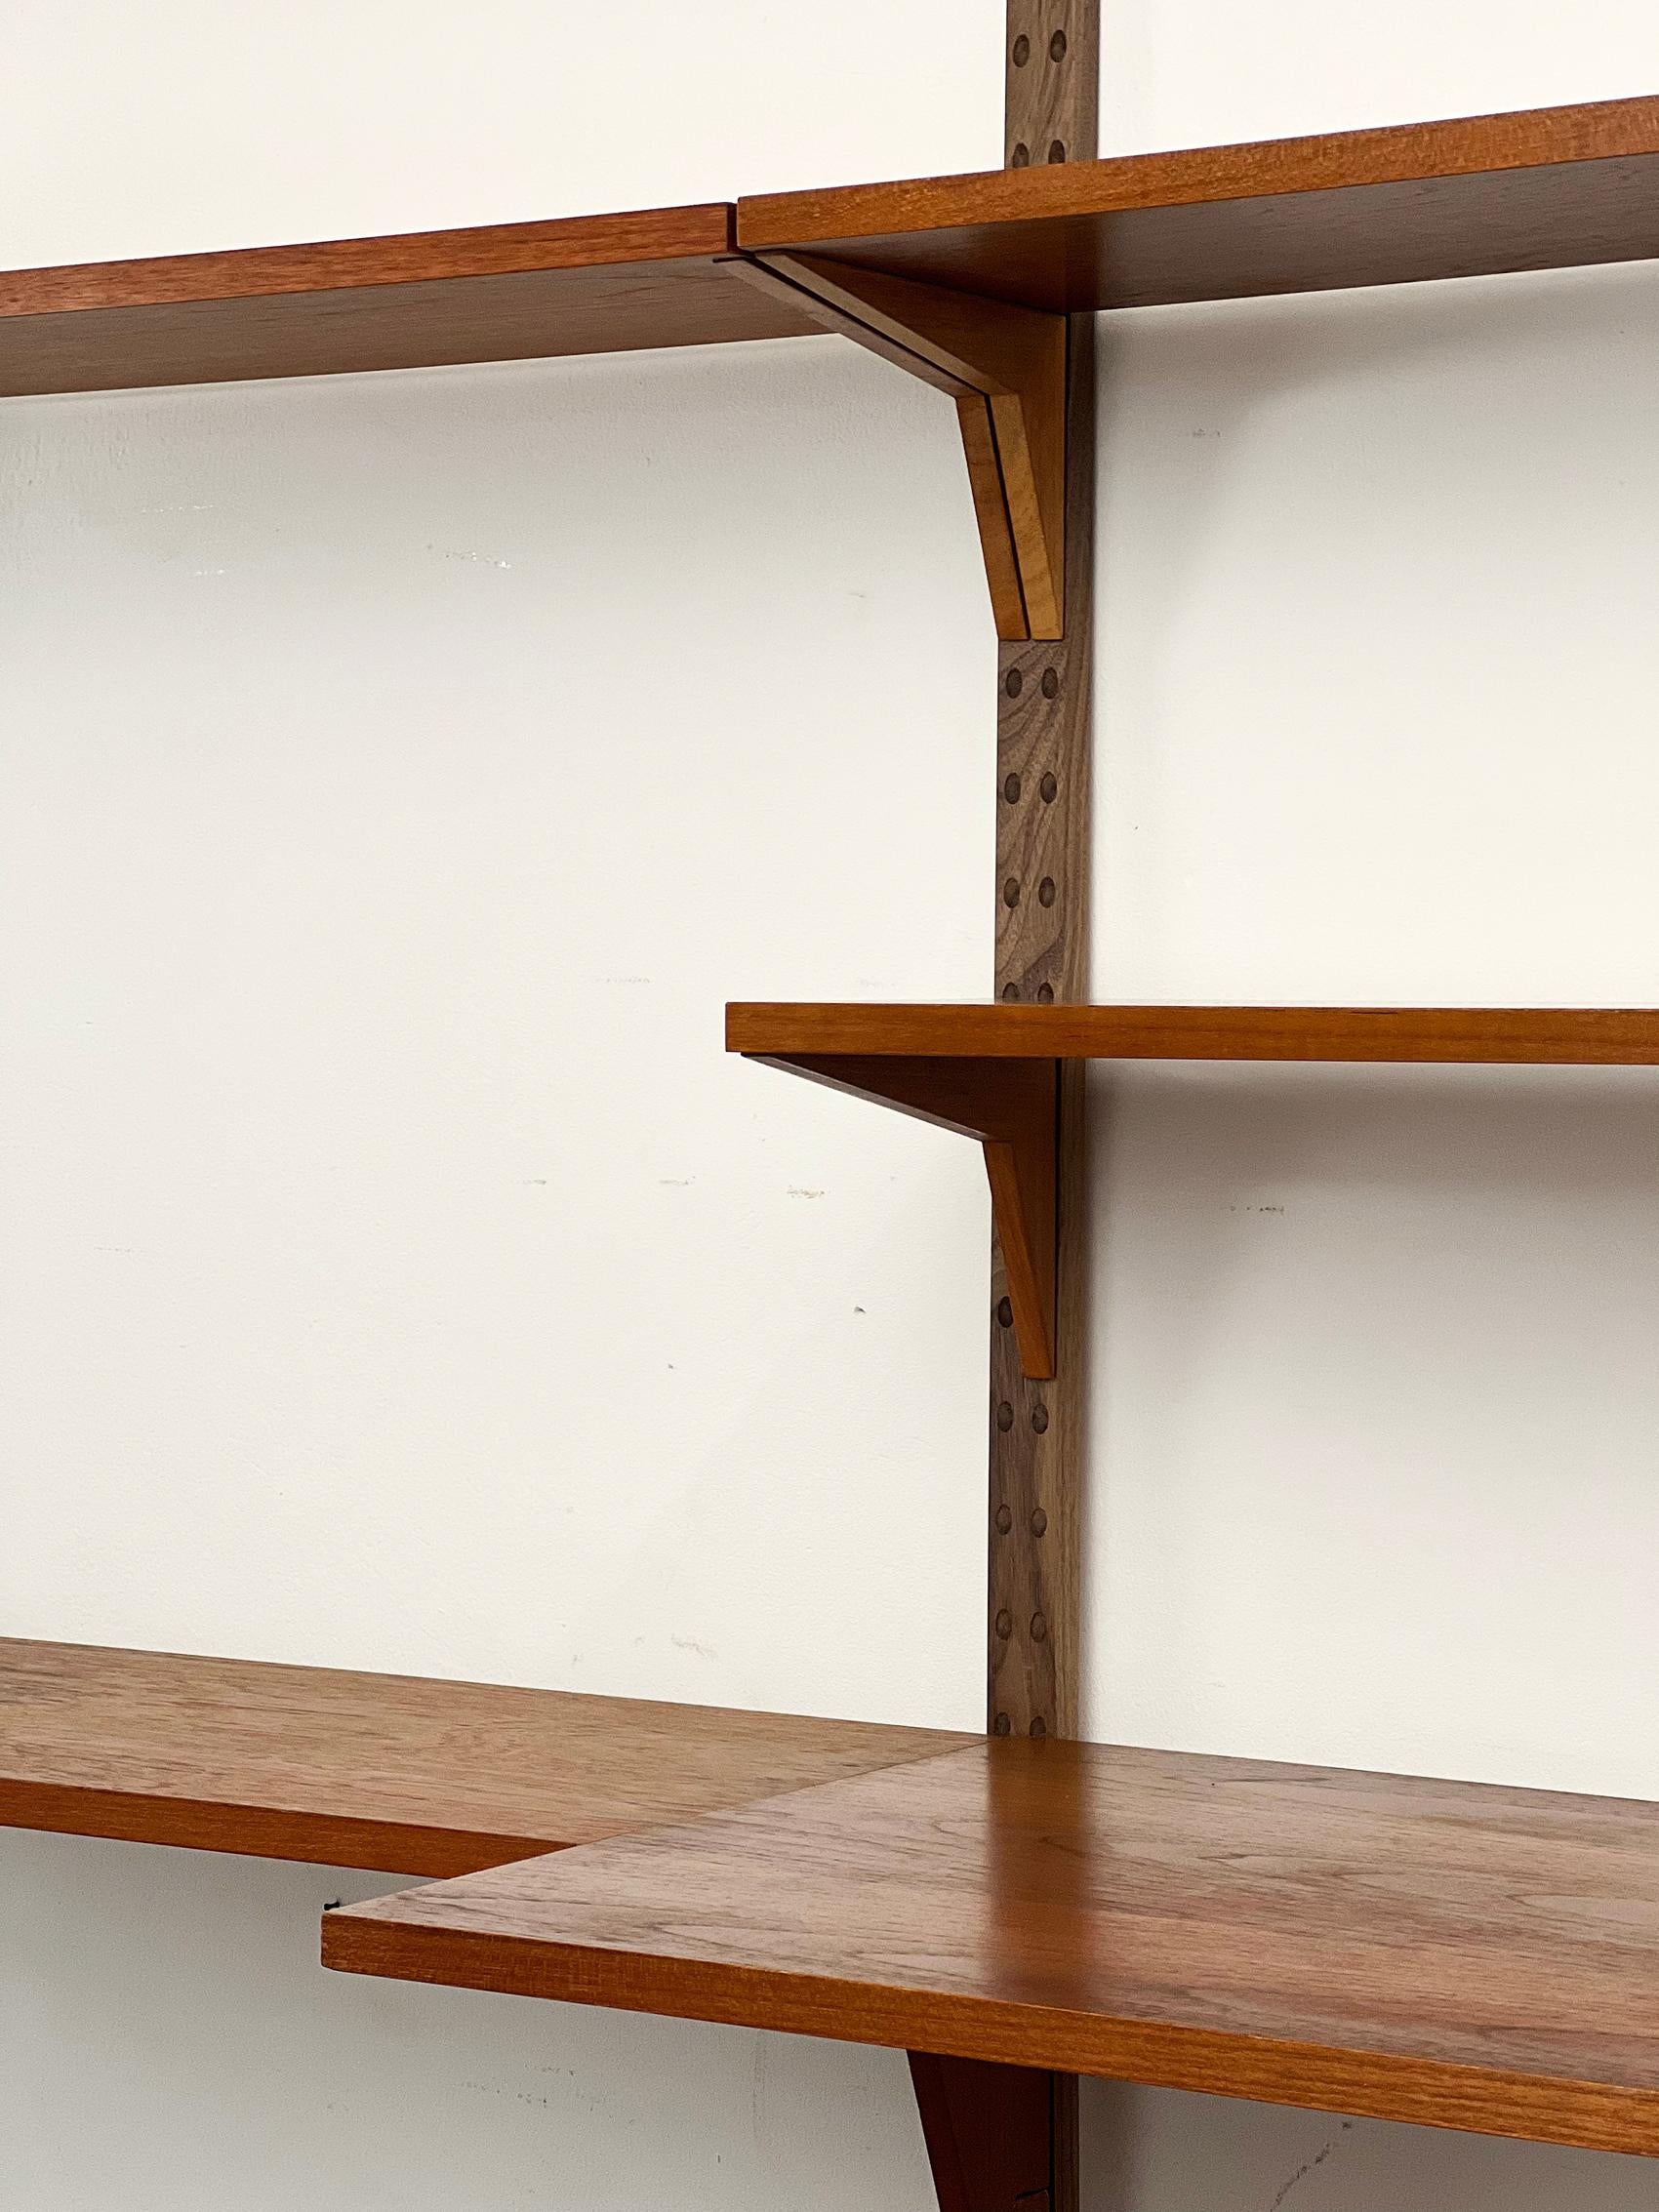 Teak Vintage Poul Cadovius Wall Unit, Mid-Century Modern Shelf Royal System, Denmark For Sale